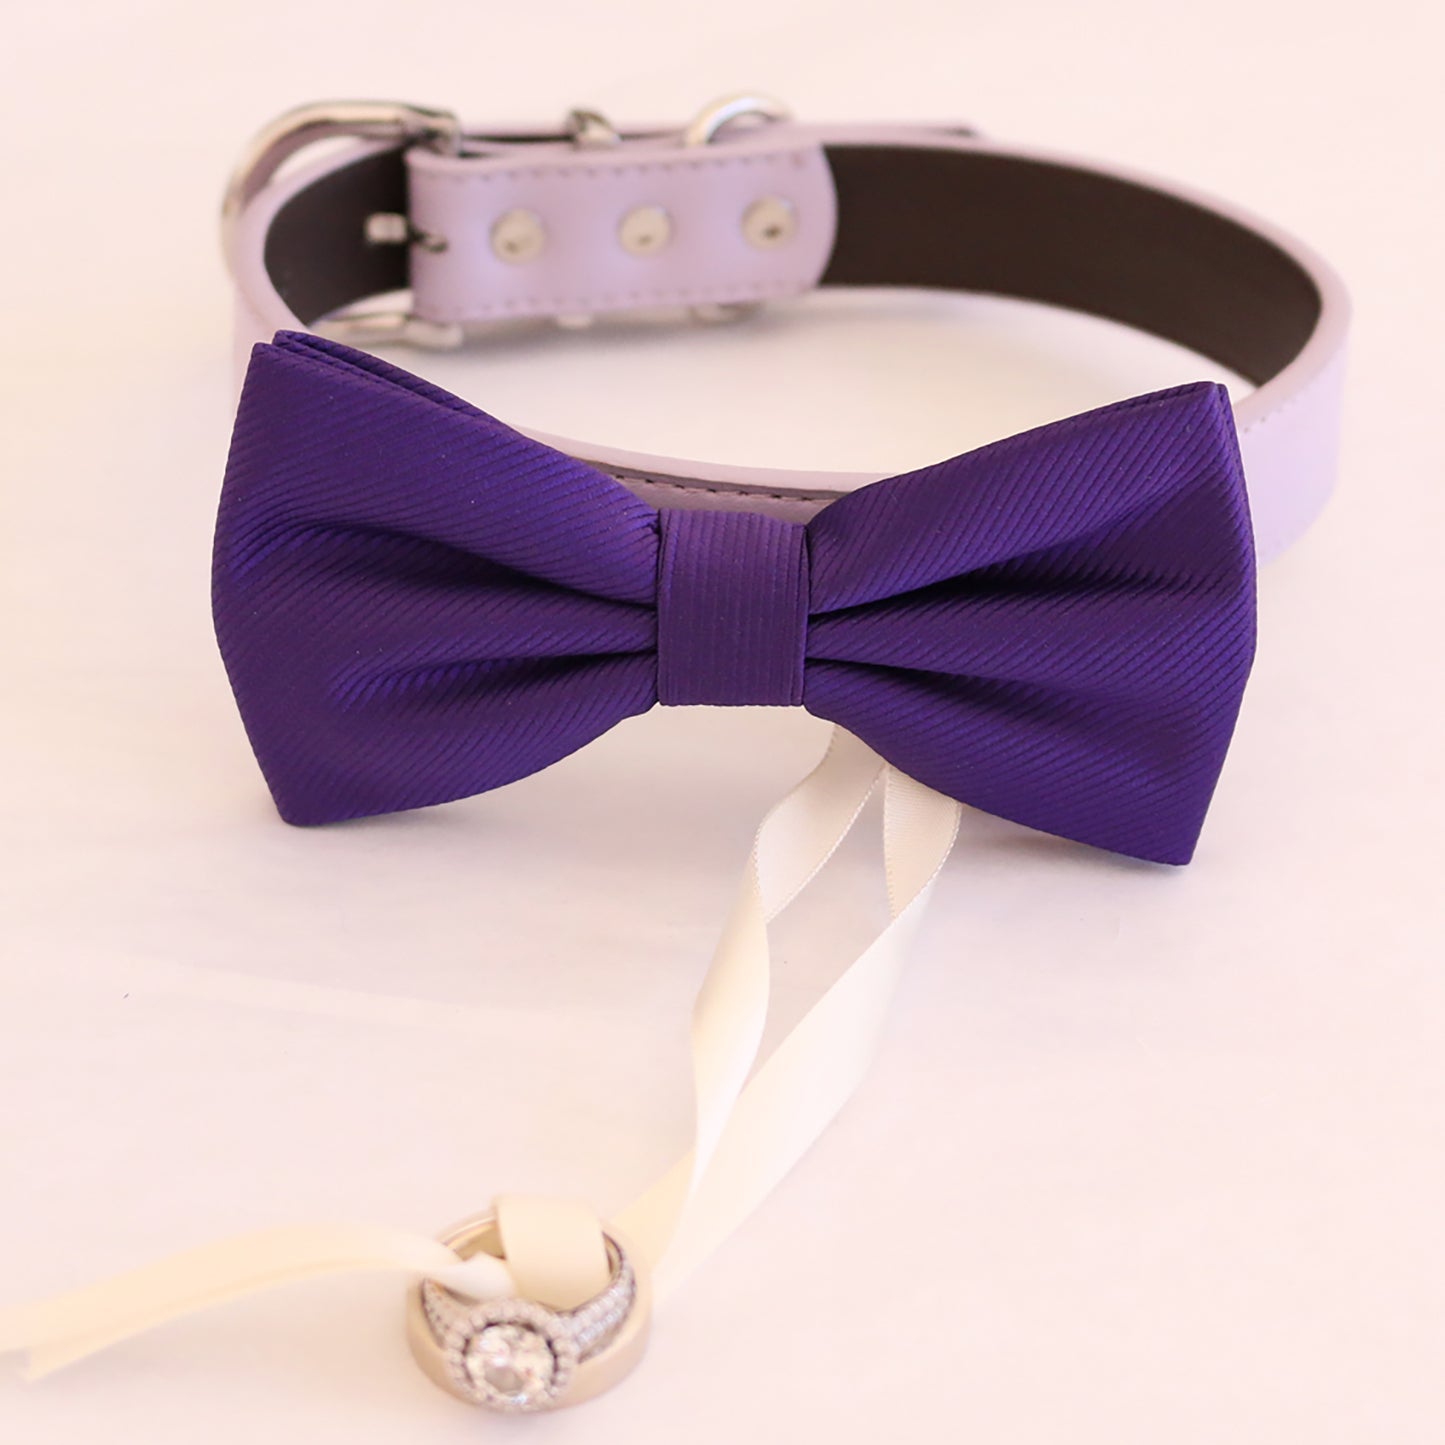 Purple bow tie collar Leather collar Dog ring bearer ring bearer adjustable handmade XS to XXL collar bow, Puppy, Proposal , Wedding dog collar